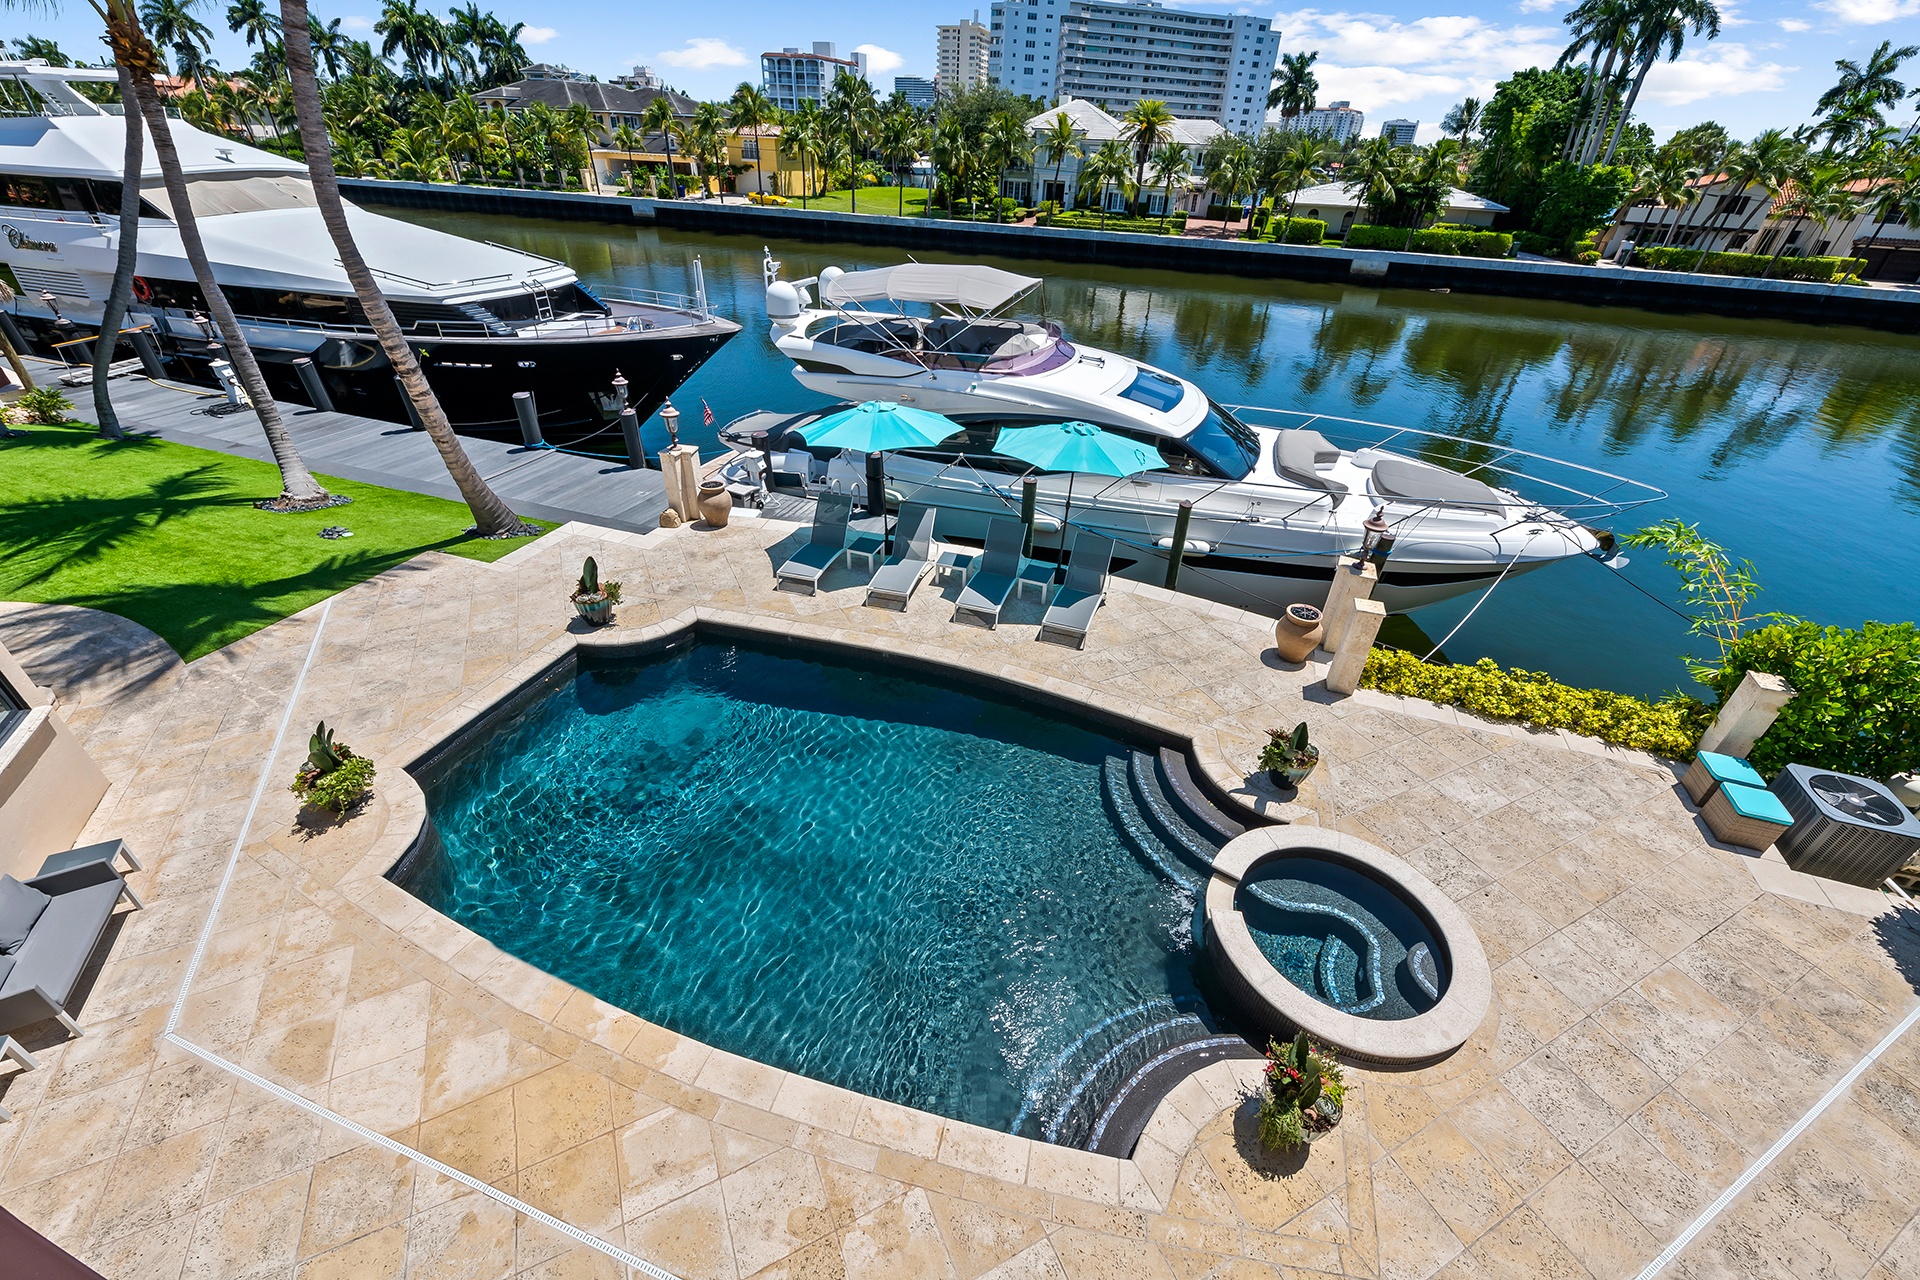 Casa Royale - Vacation rental in Fort Lauderdale - Debbie Wysocki